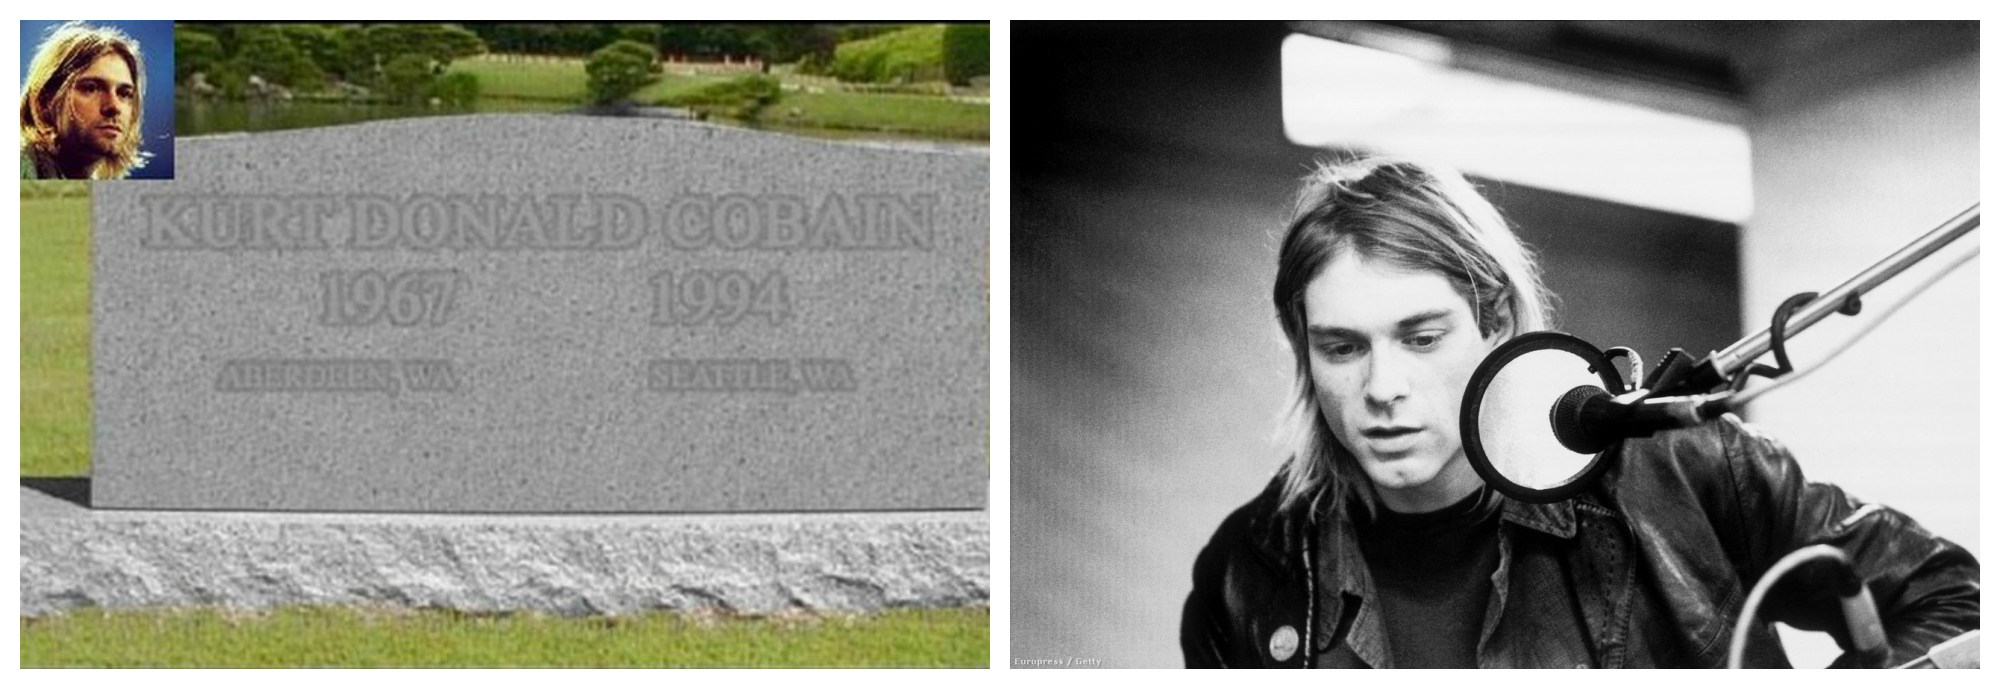 Kurt cobain фото после смерти